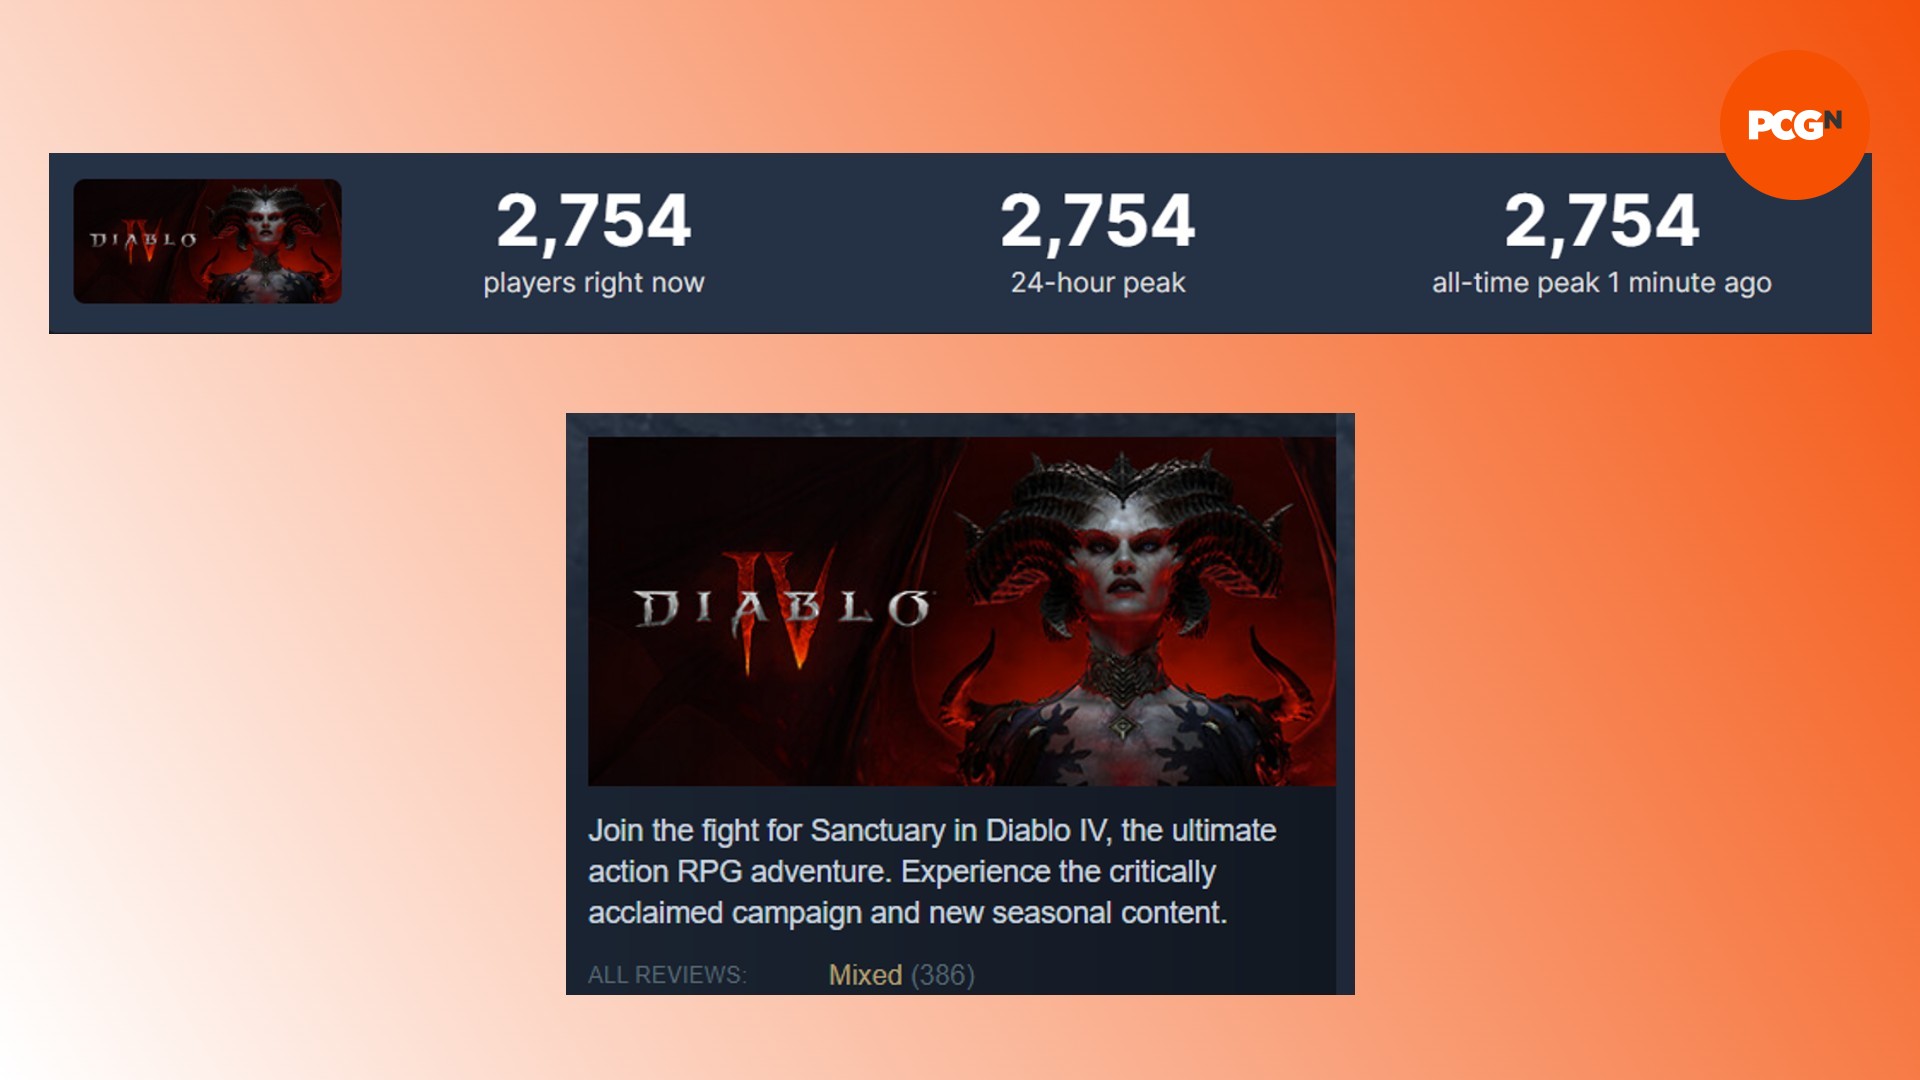 Diablo 4 Steam reviews: A comparison of data based on the Diablo 4 Steam launch